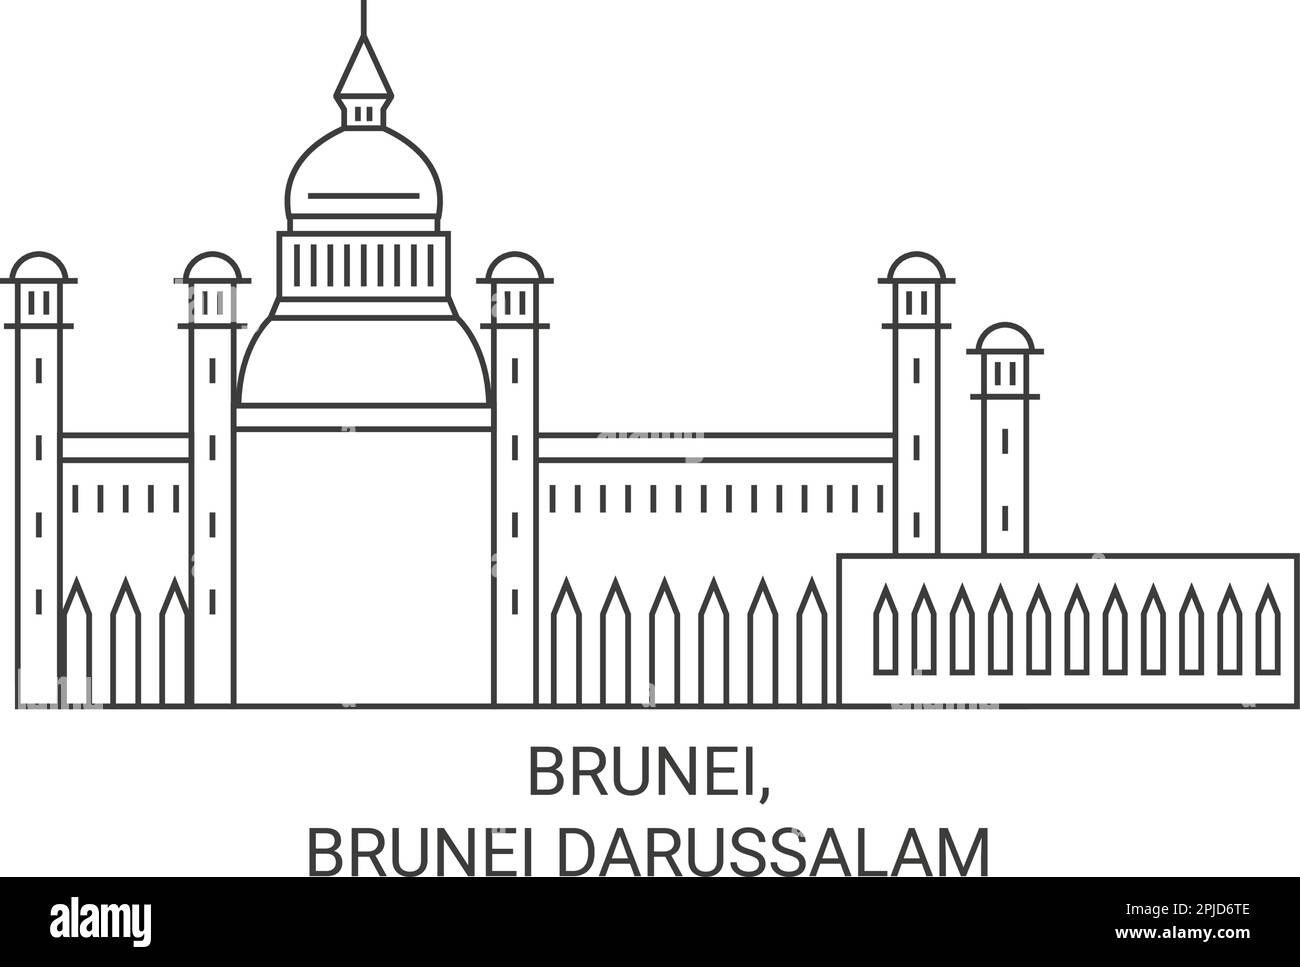 Brunei, Brunei Darussalam viaggio riferimento vettoriale illustrazione Illustrazione Vettoriale